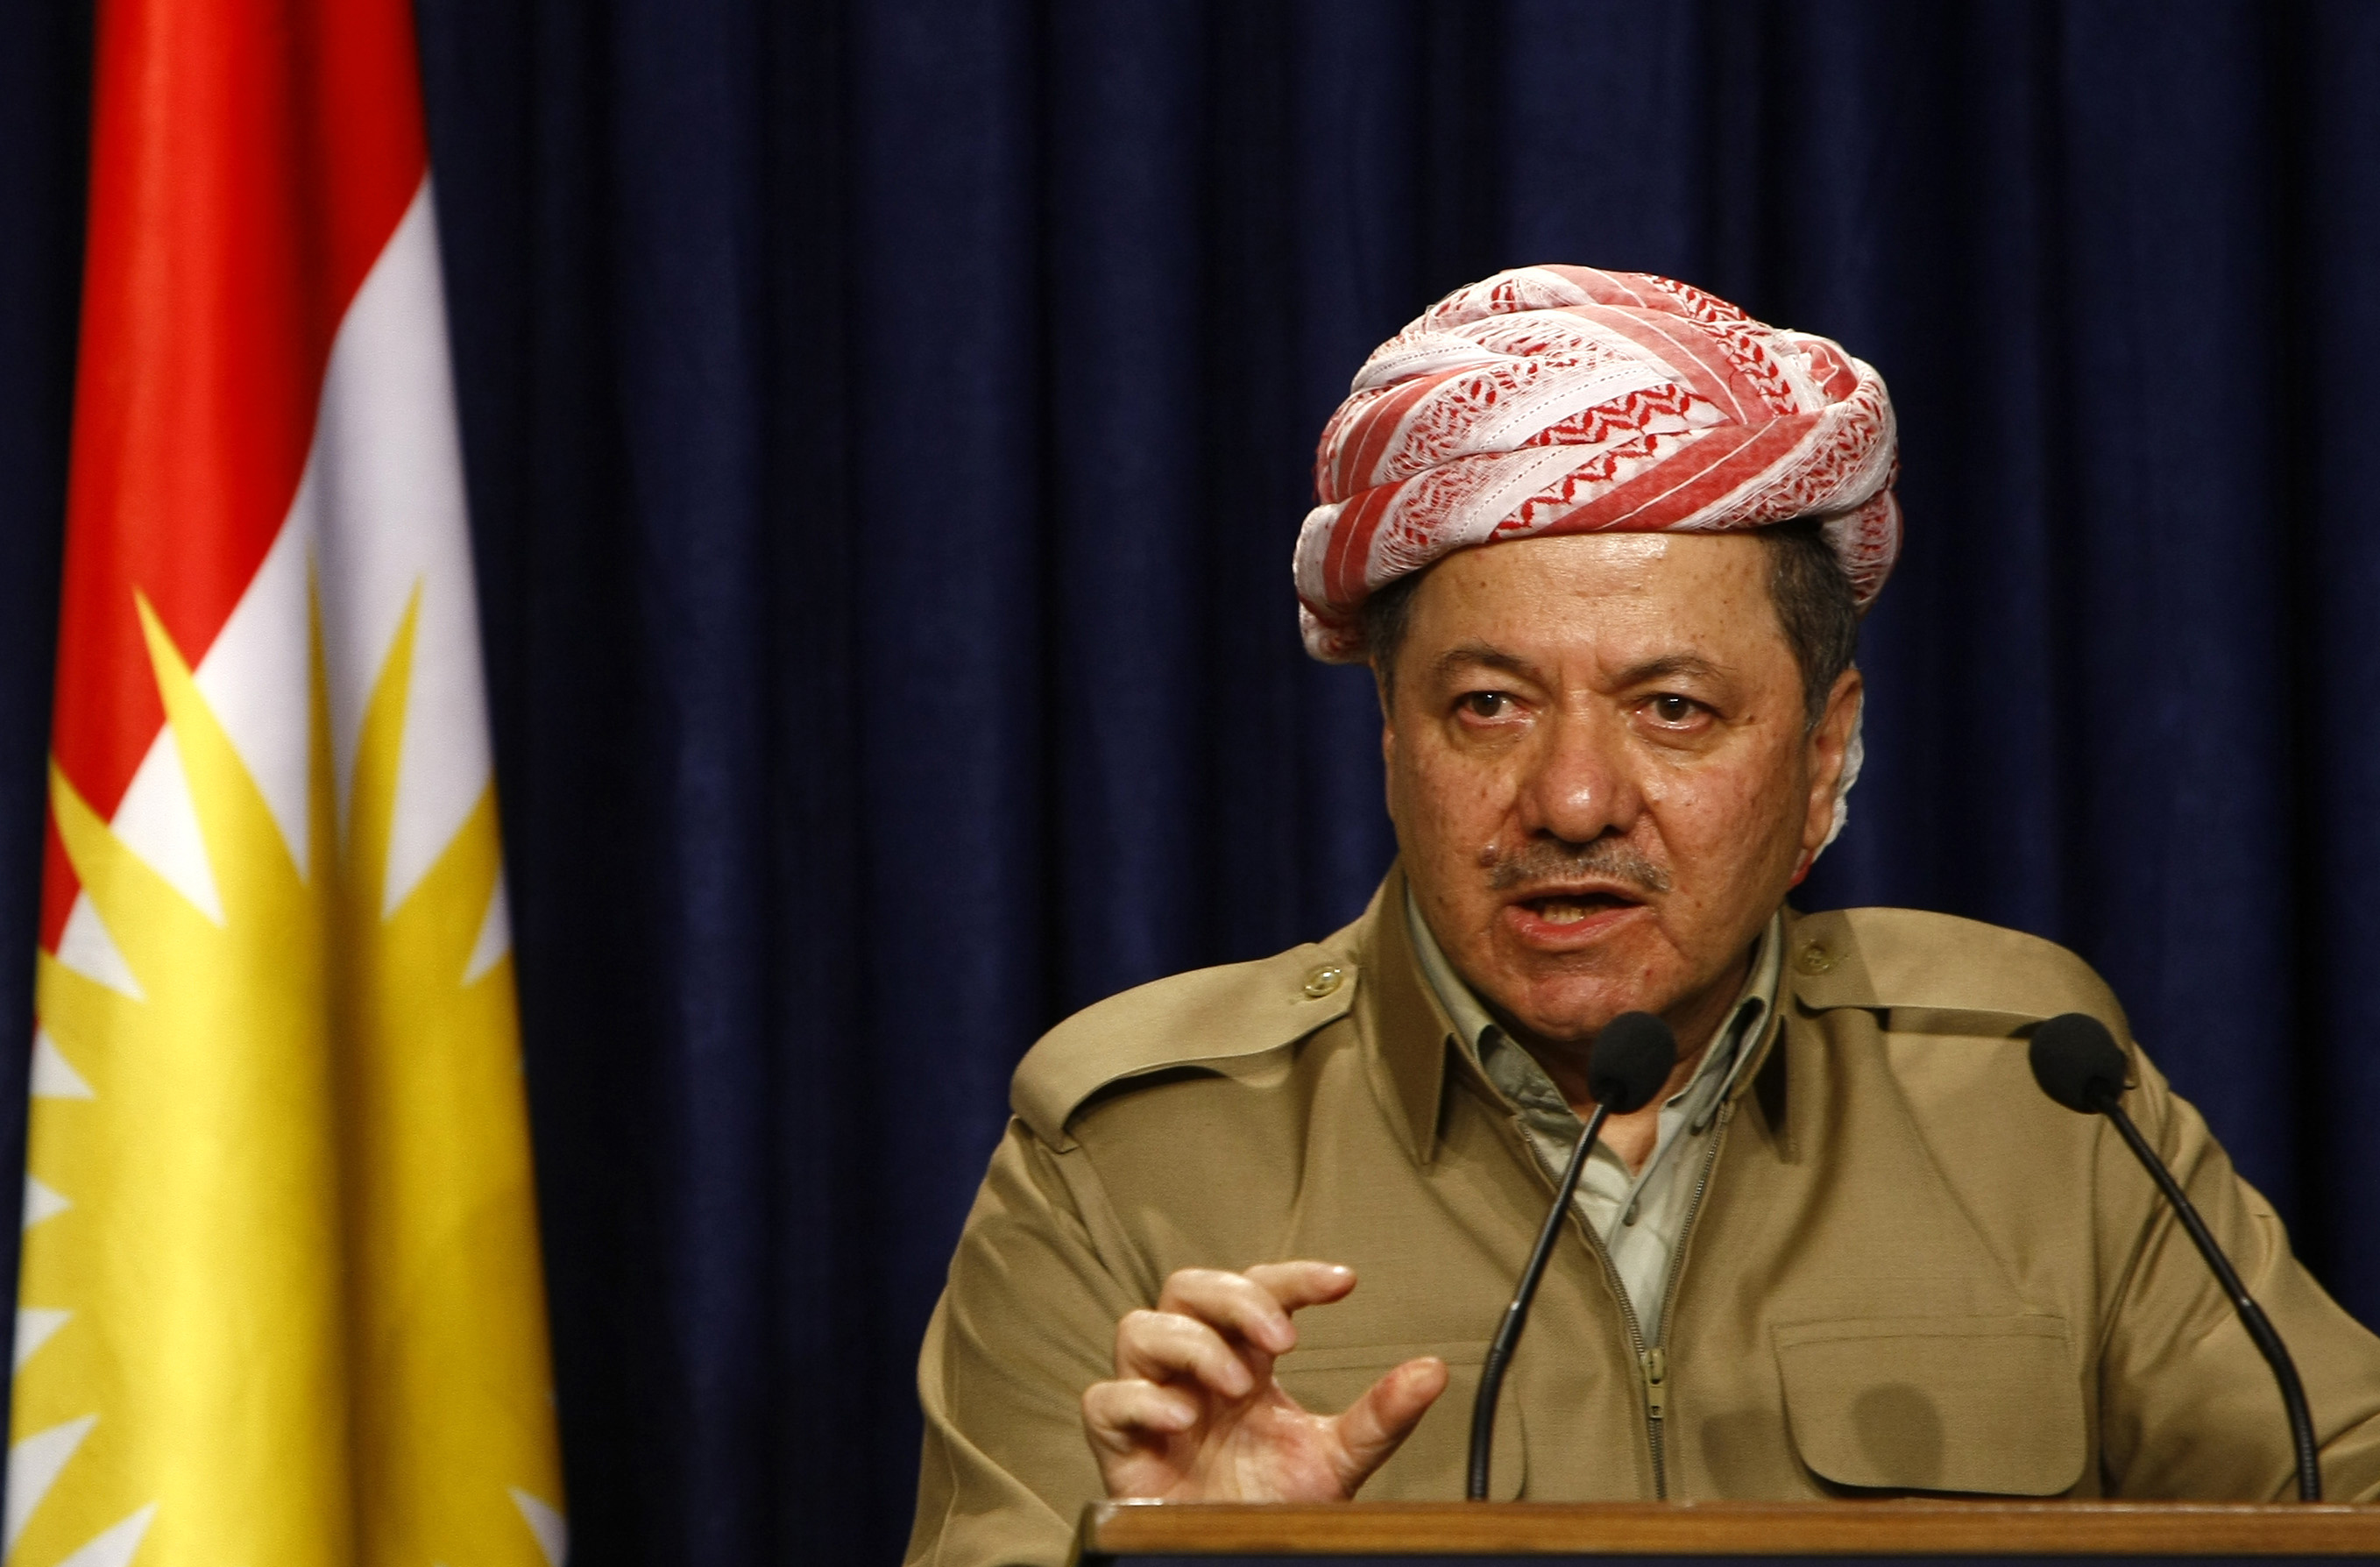 President of Iraqi Kurdistan Announces Movement Towards ‘Sovereignty’